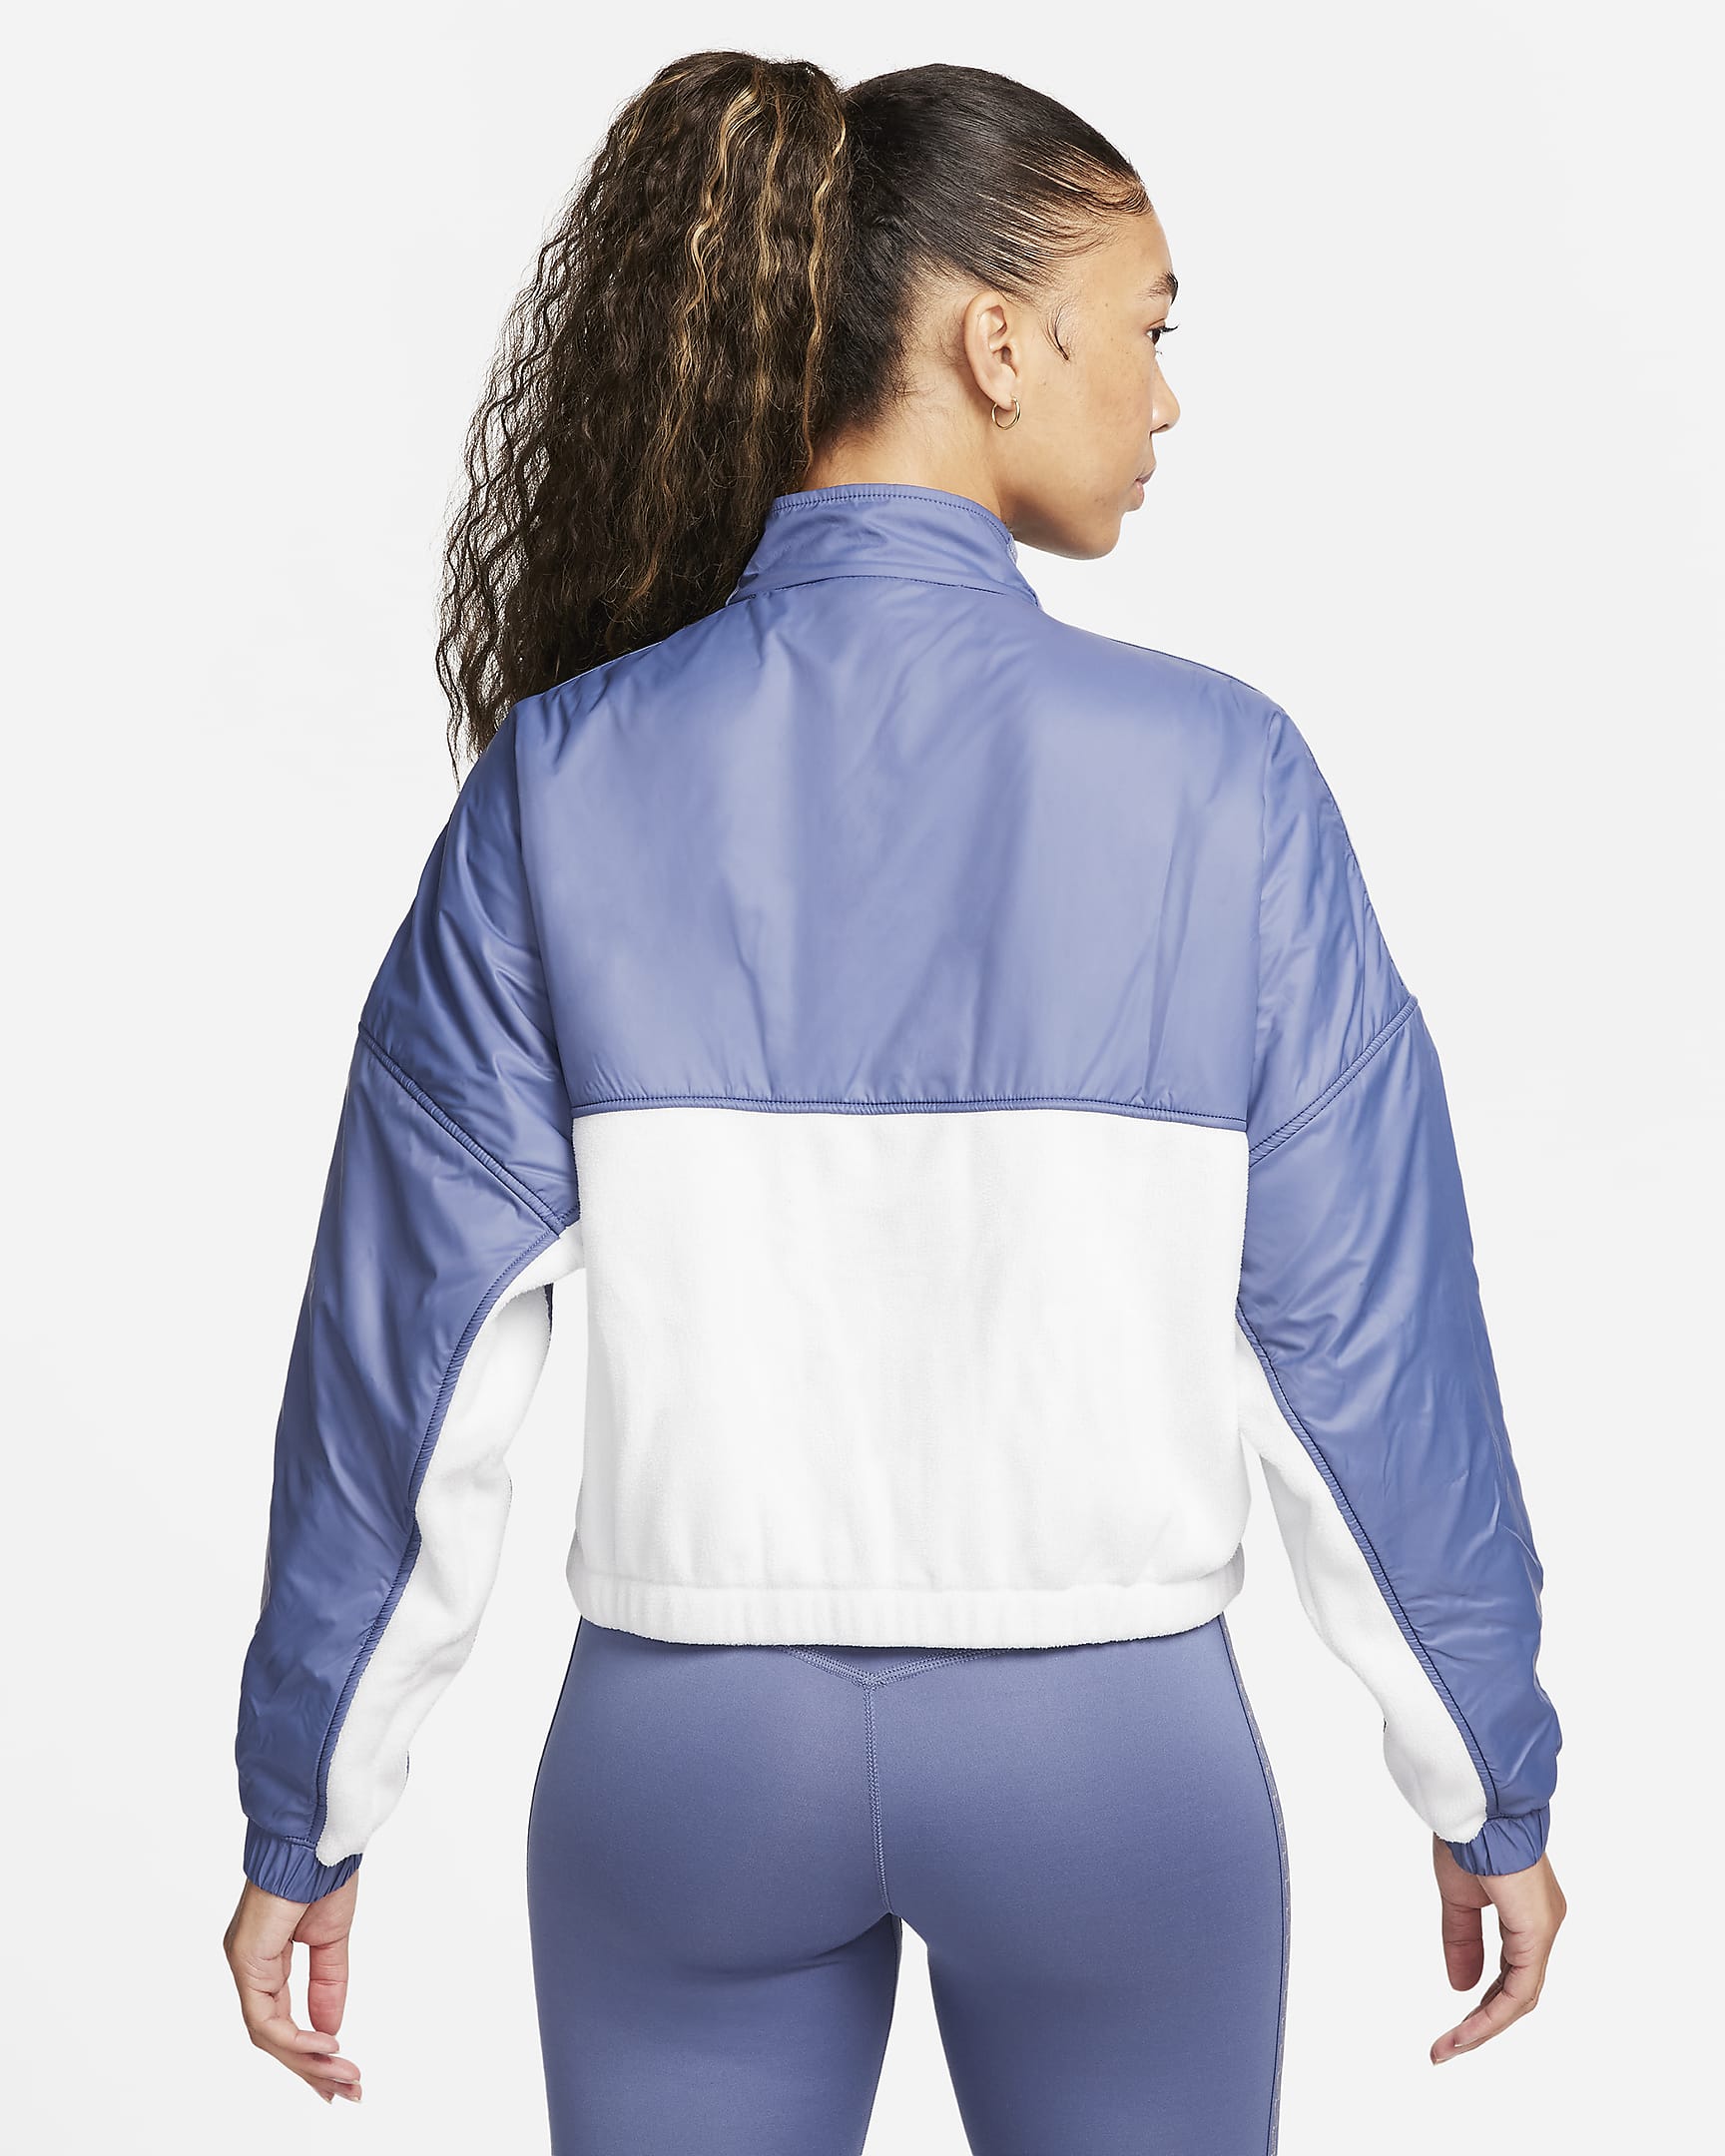 Nike Therma-FIT One Women's Fleece Full-Zip Jacket. Nike BG